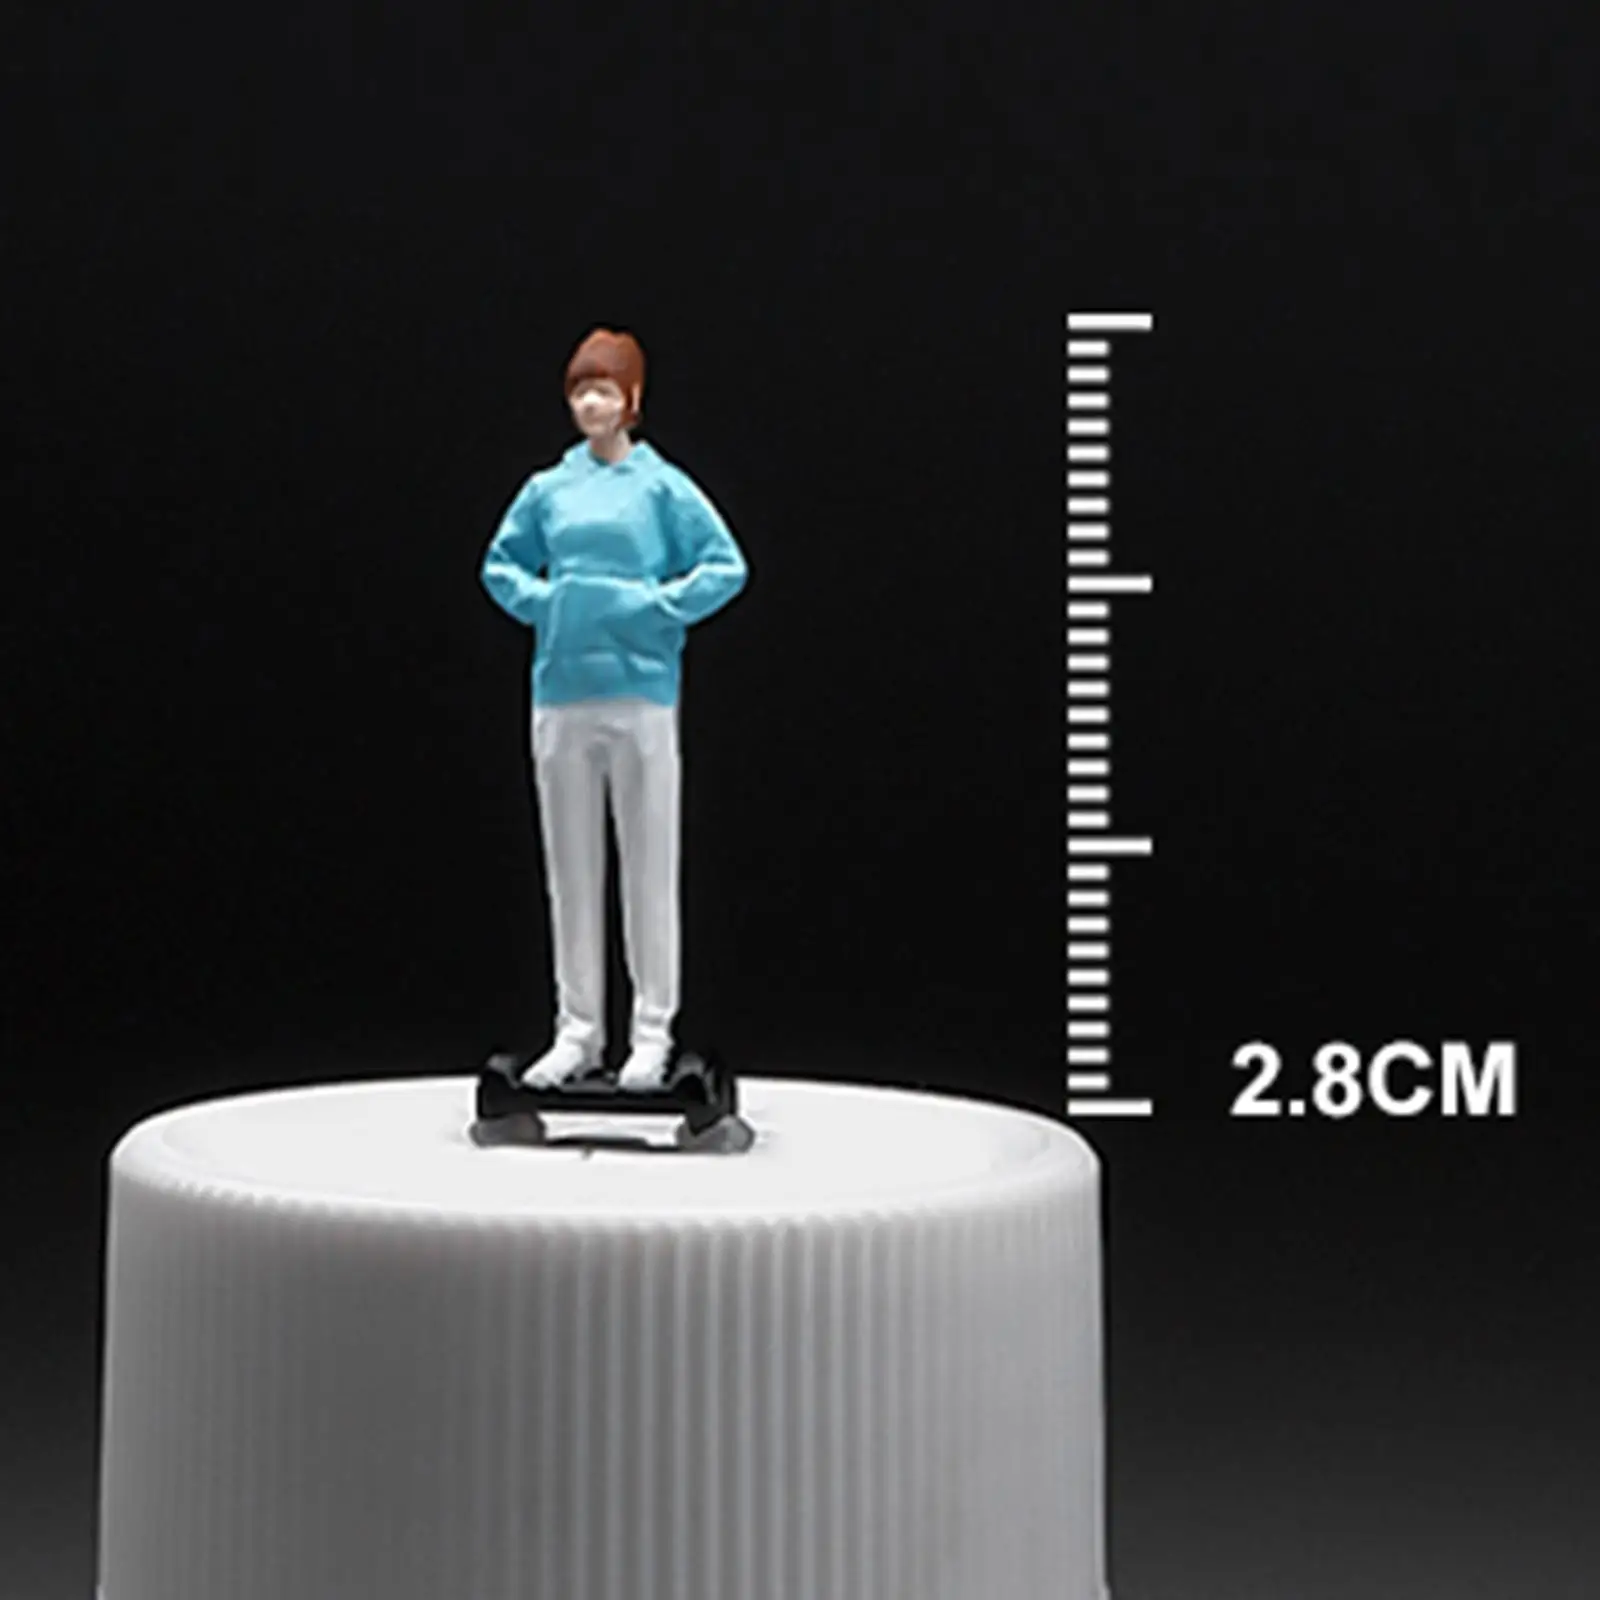 1/64 Scale Handmade Miniature Resin Accessories for Playhouses, Studio Scenes, Tabletop Decor Lightweight for Balance Bike Girl